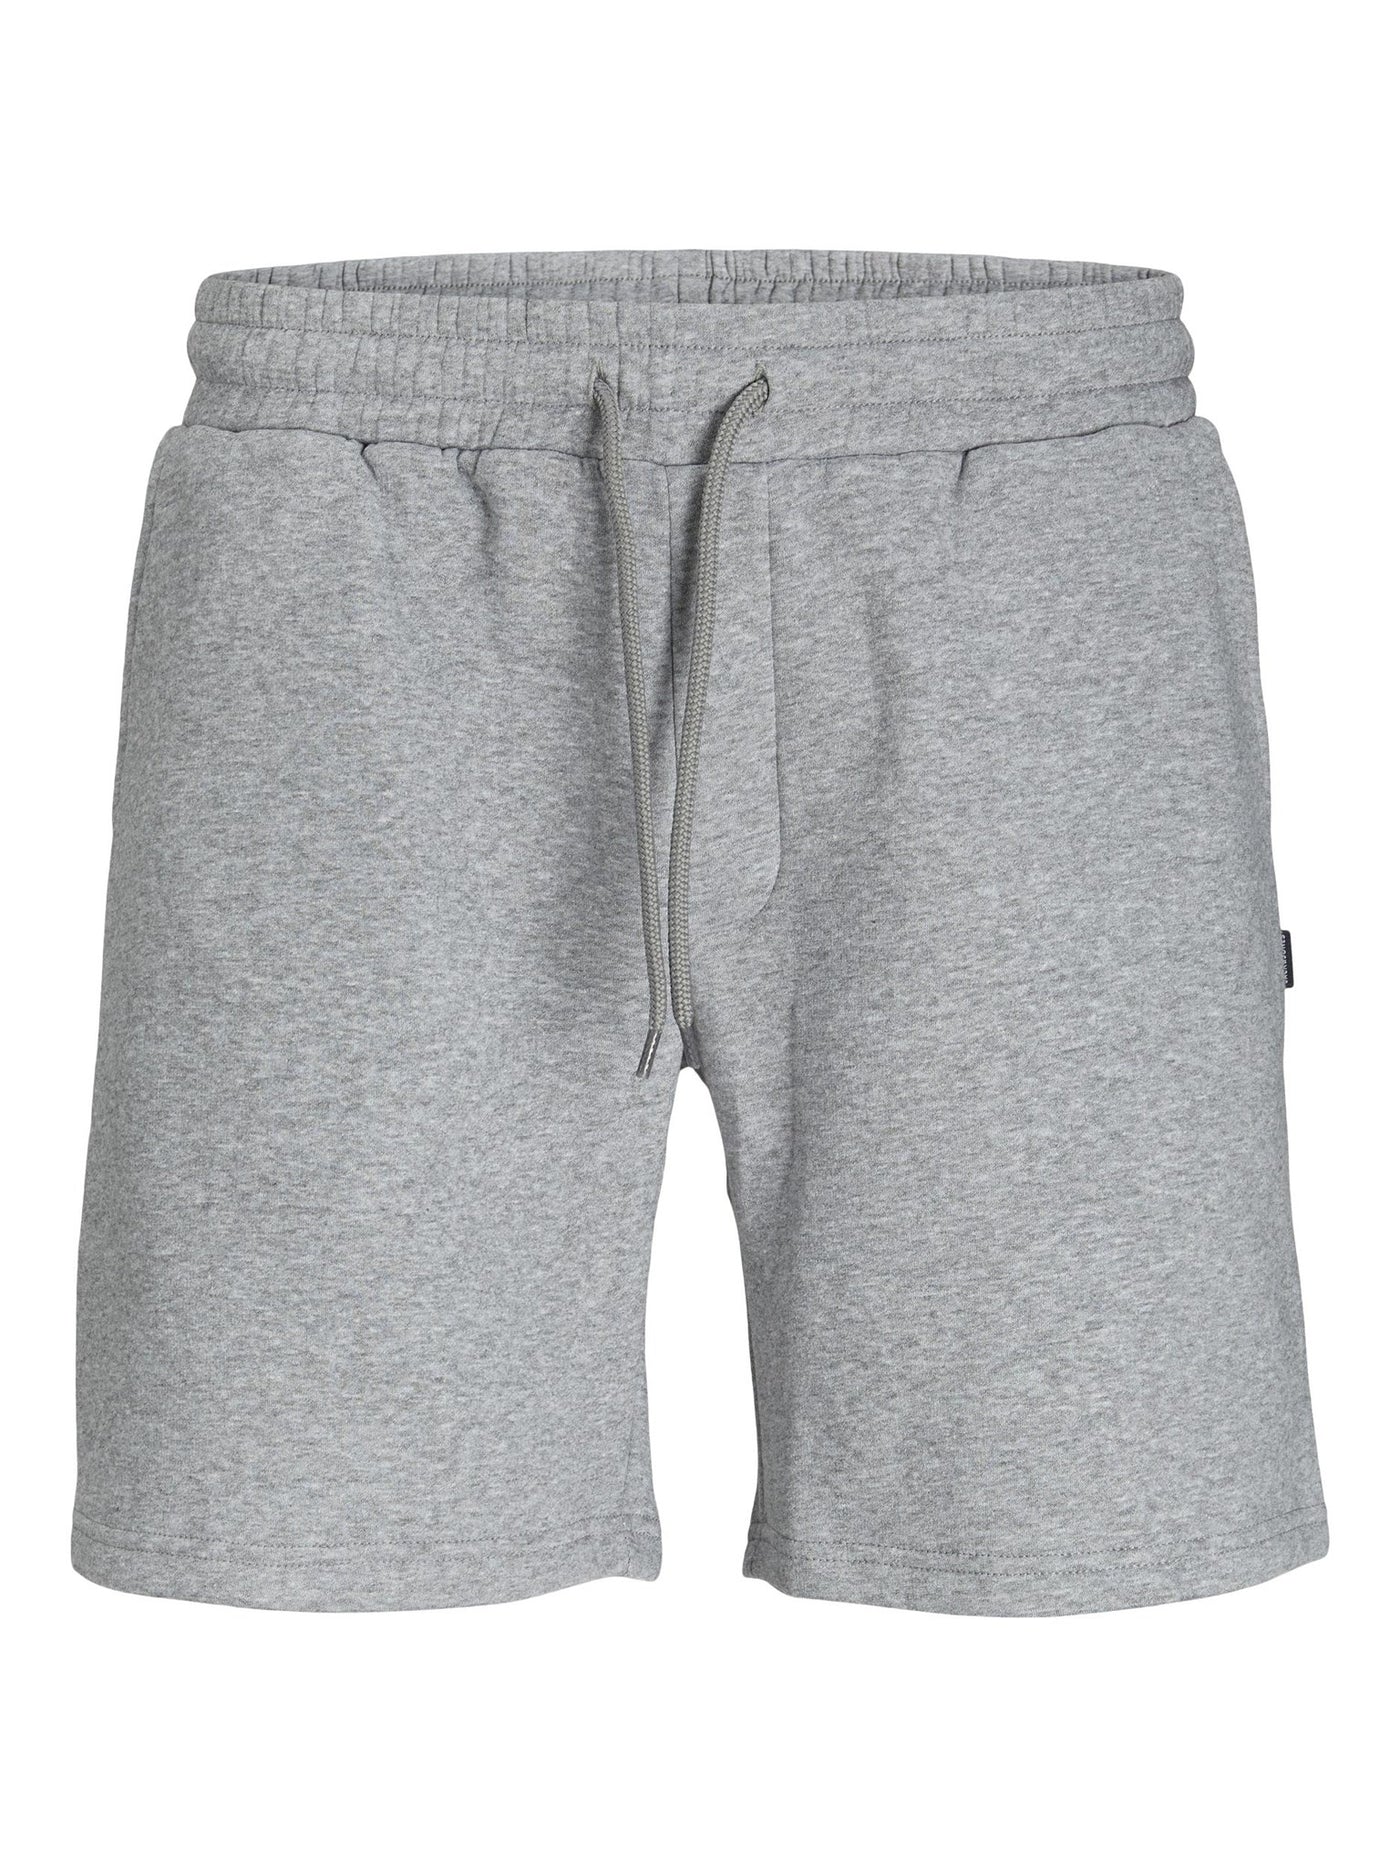 Star Sweat Shorts - Light Grey Melange - Jack & Jones - Grey 7